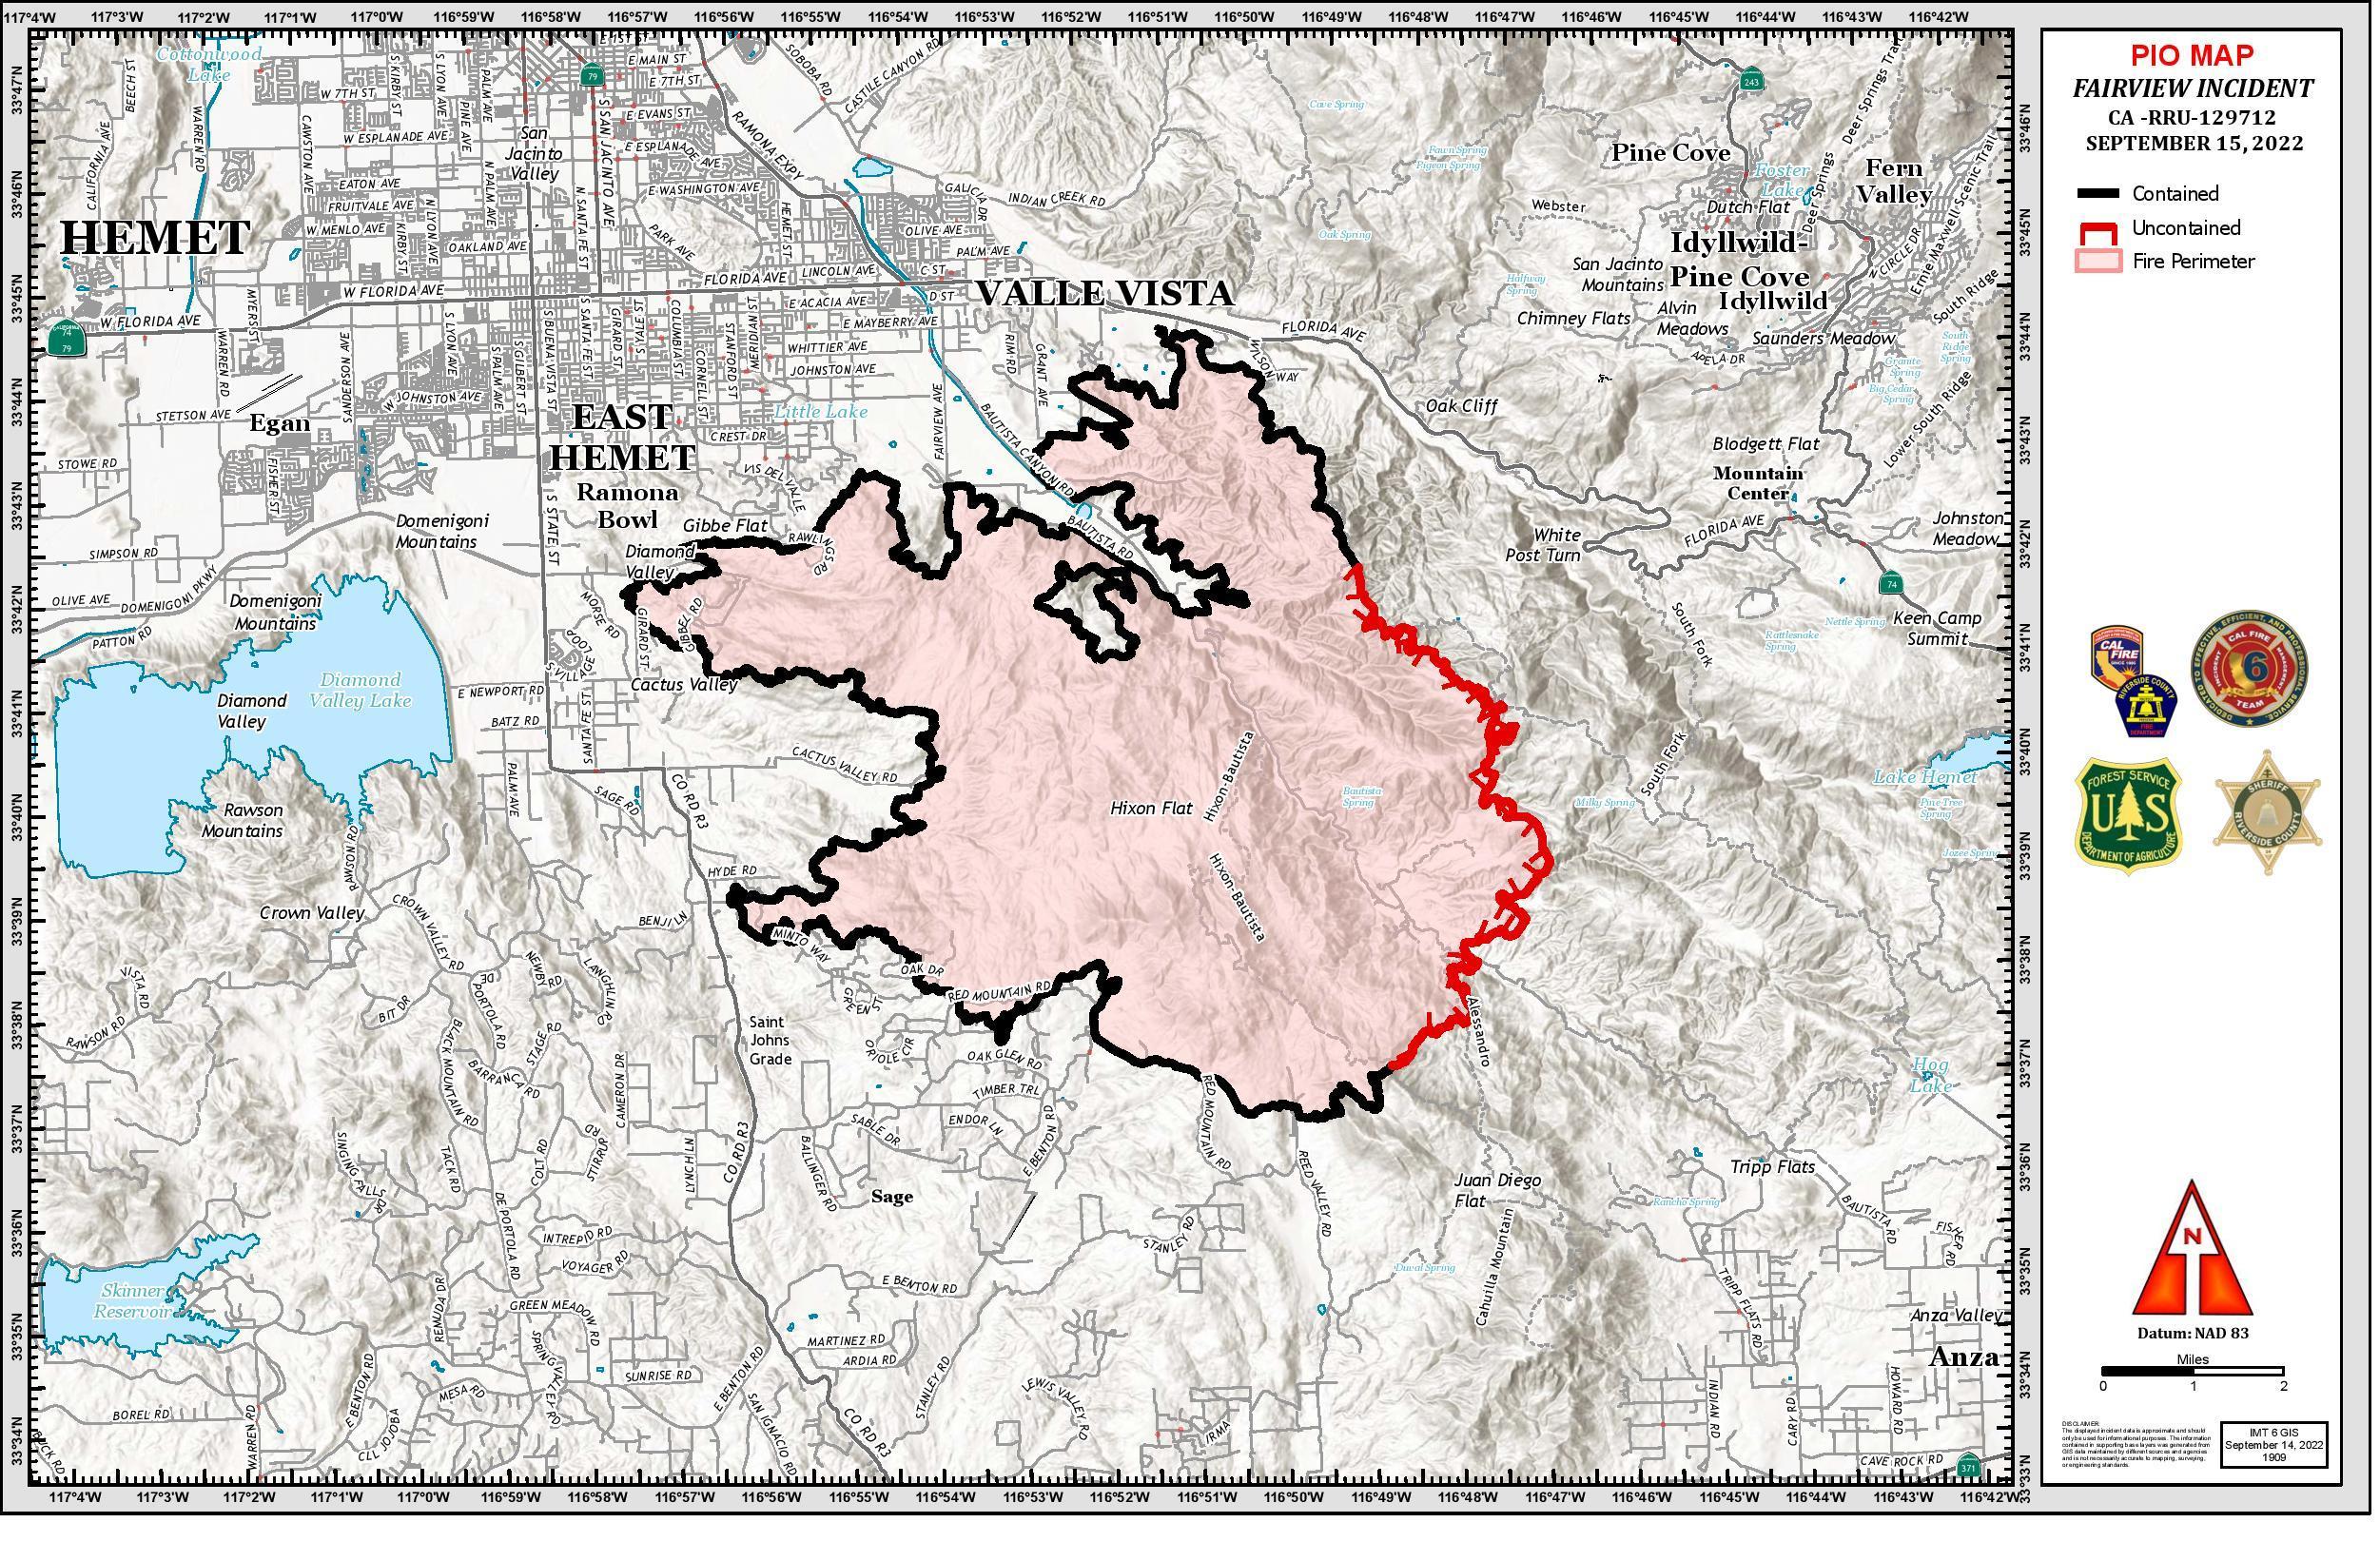 Fairview Fire Public Information Map Sept 15, 2022